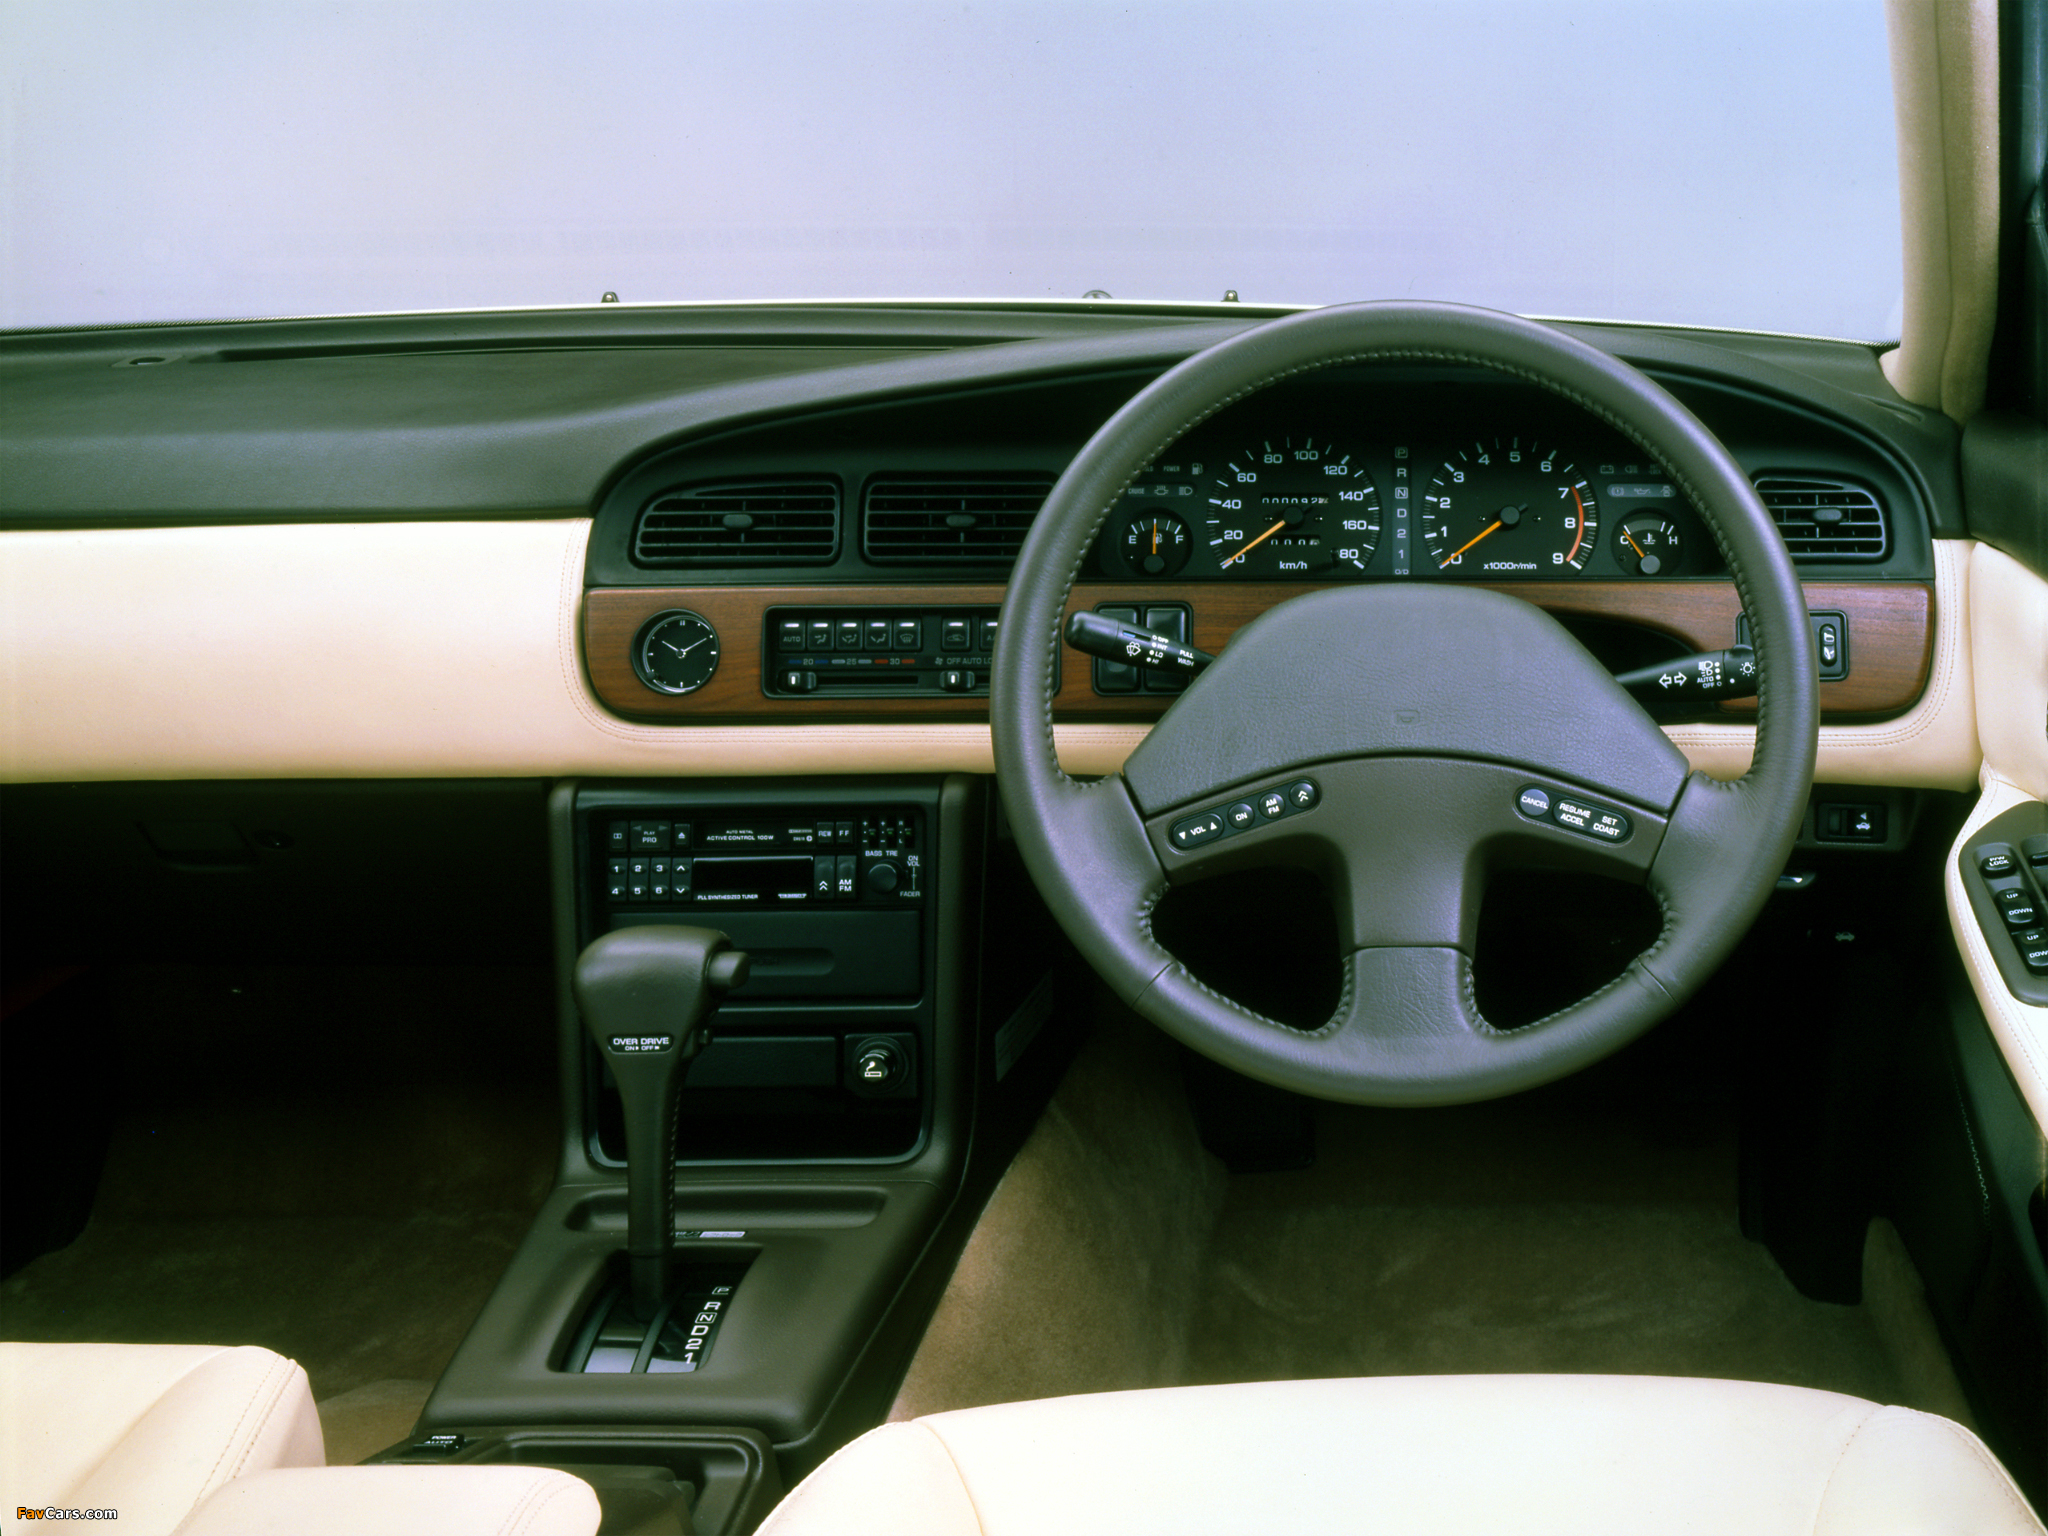 Sa 6 c. Nissan Laurel hc33. Nissan Лаурель 33. Nissan Laurel c33 1989. Nissan Laurel c33 салон.